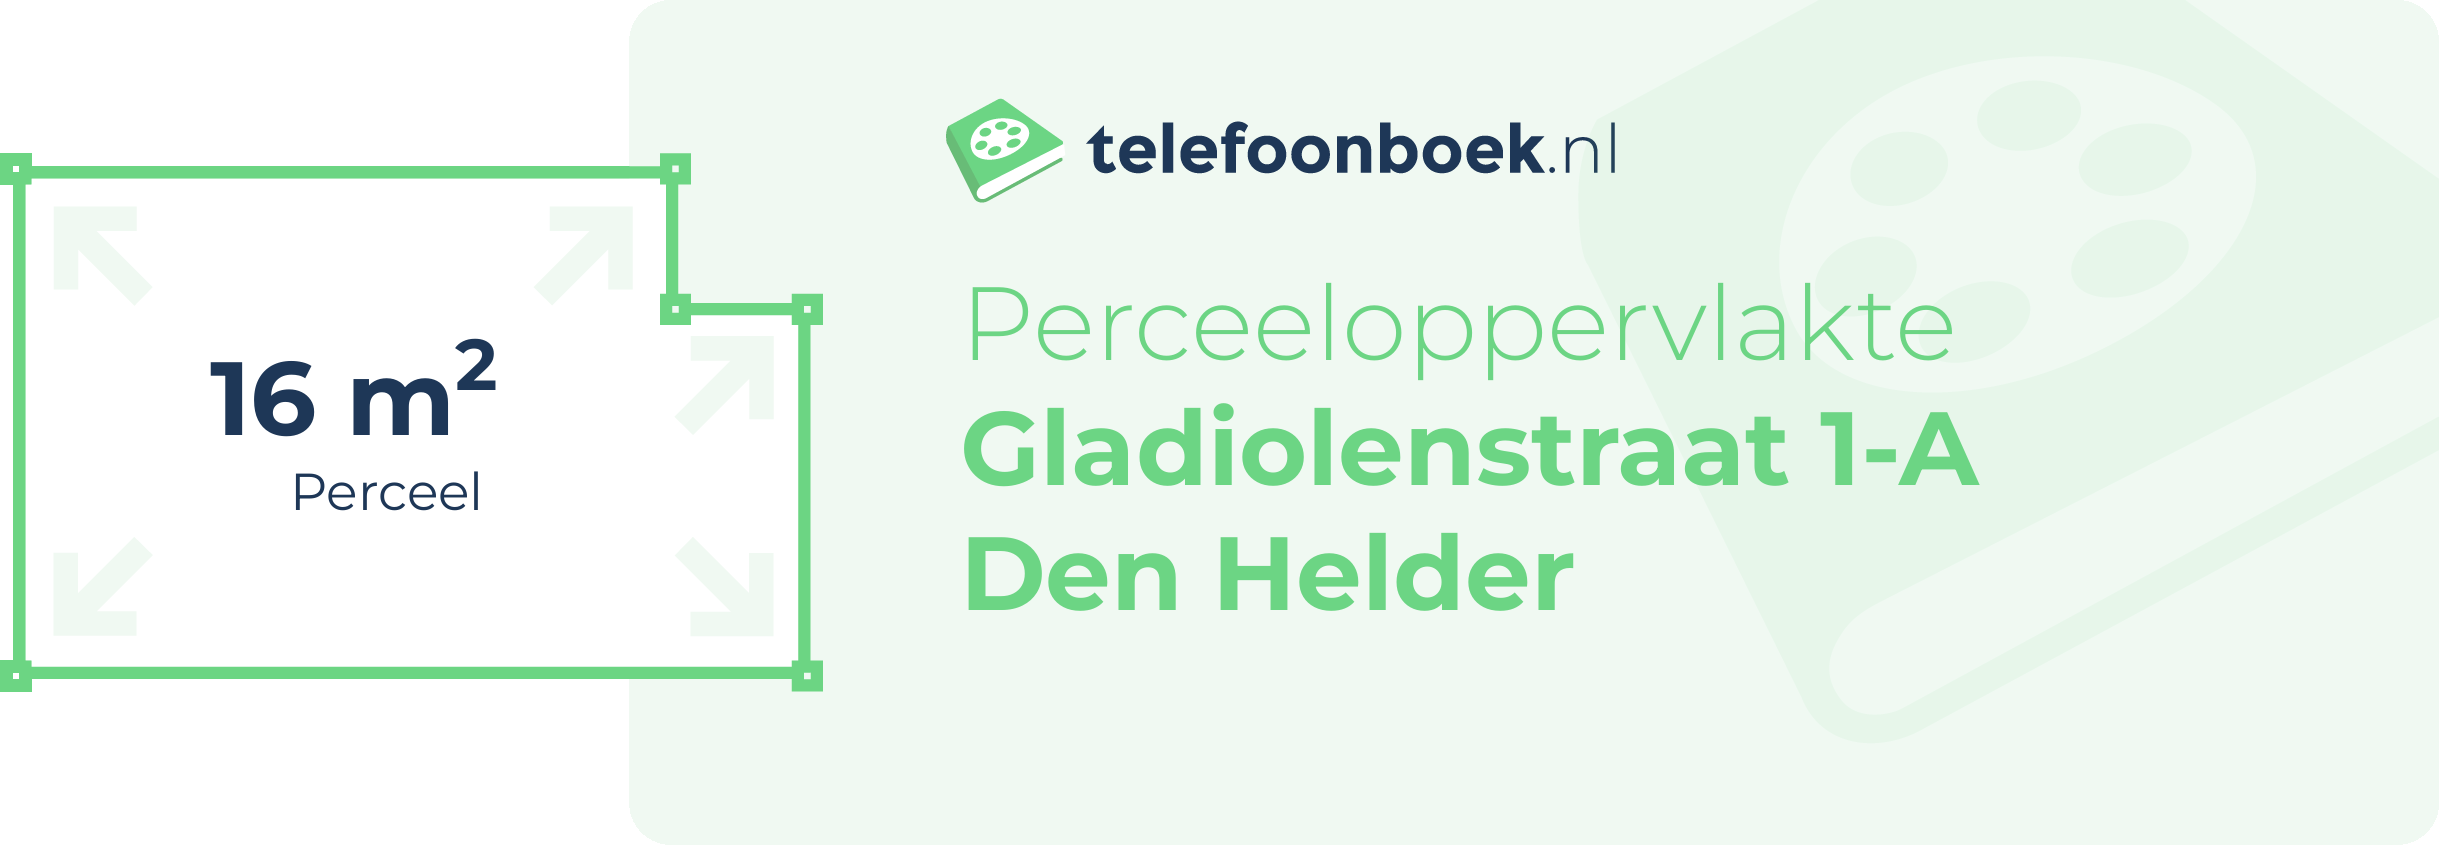 Perceeloppervlakte Gladiolenstraat 1-A Den Helder